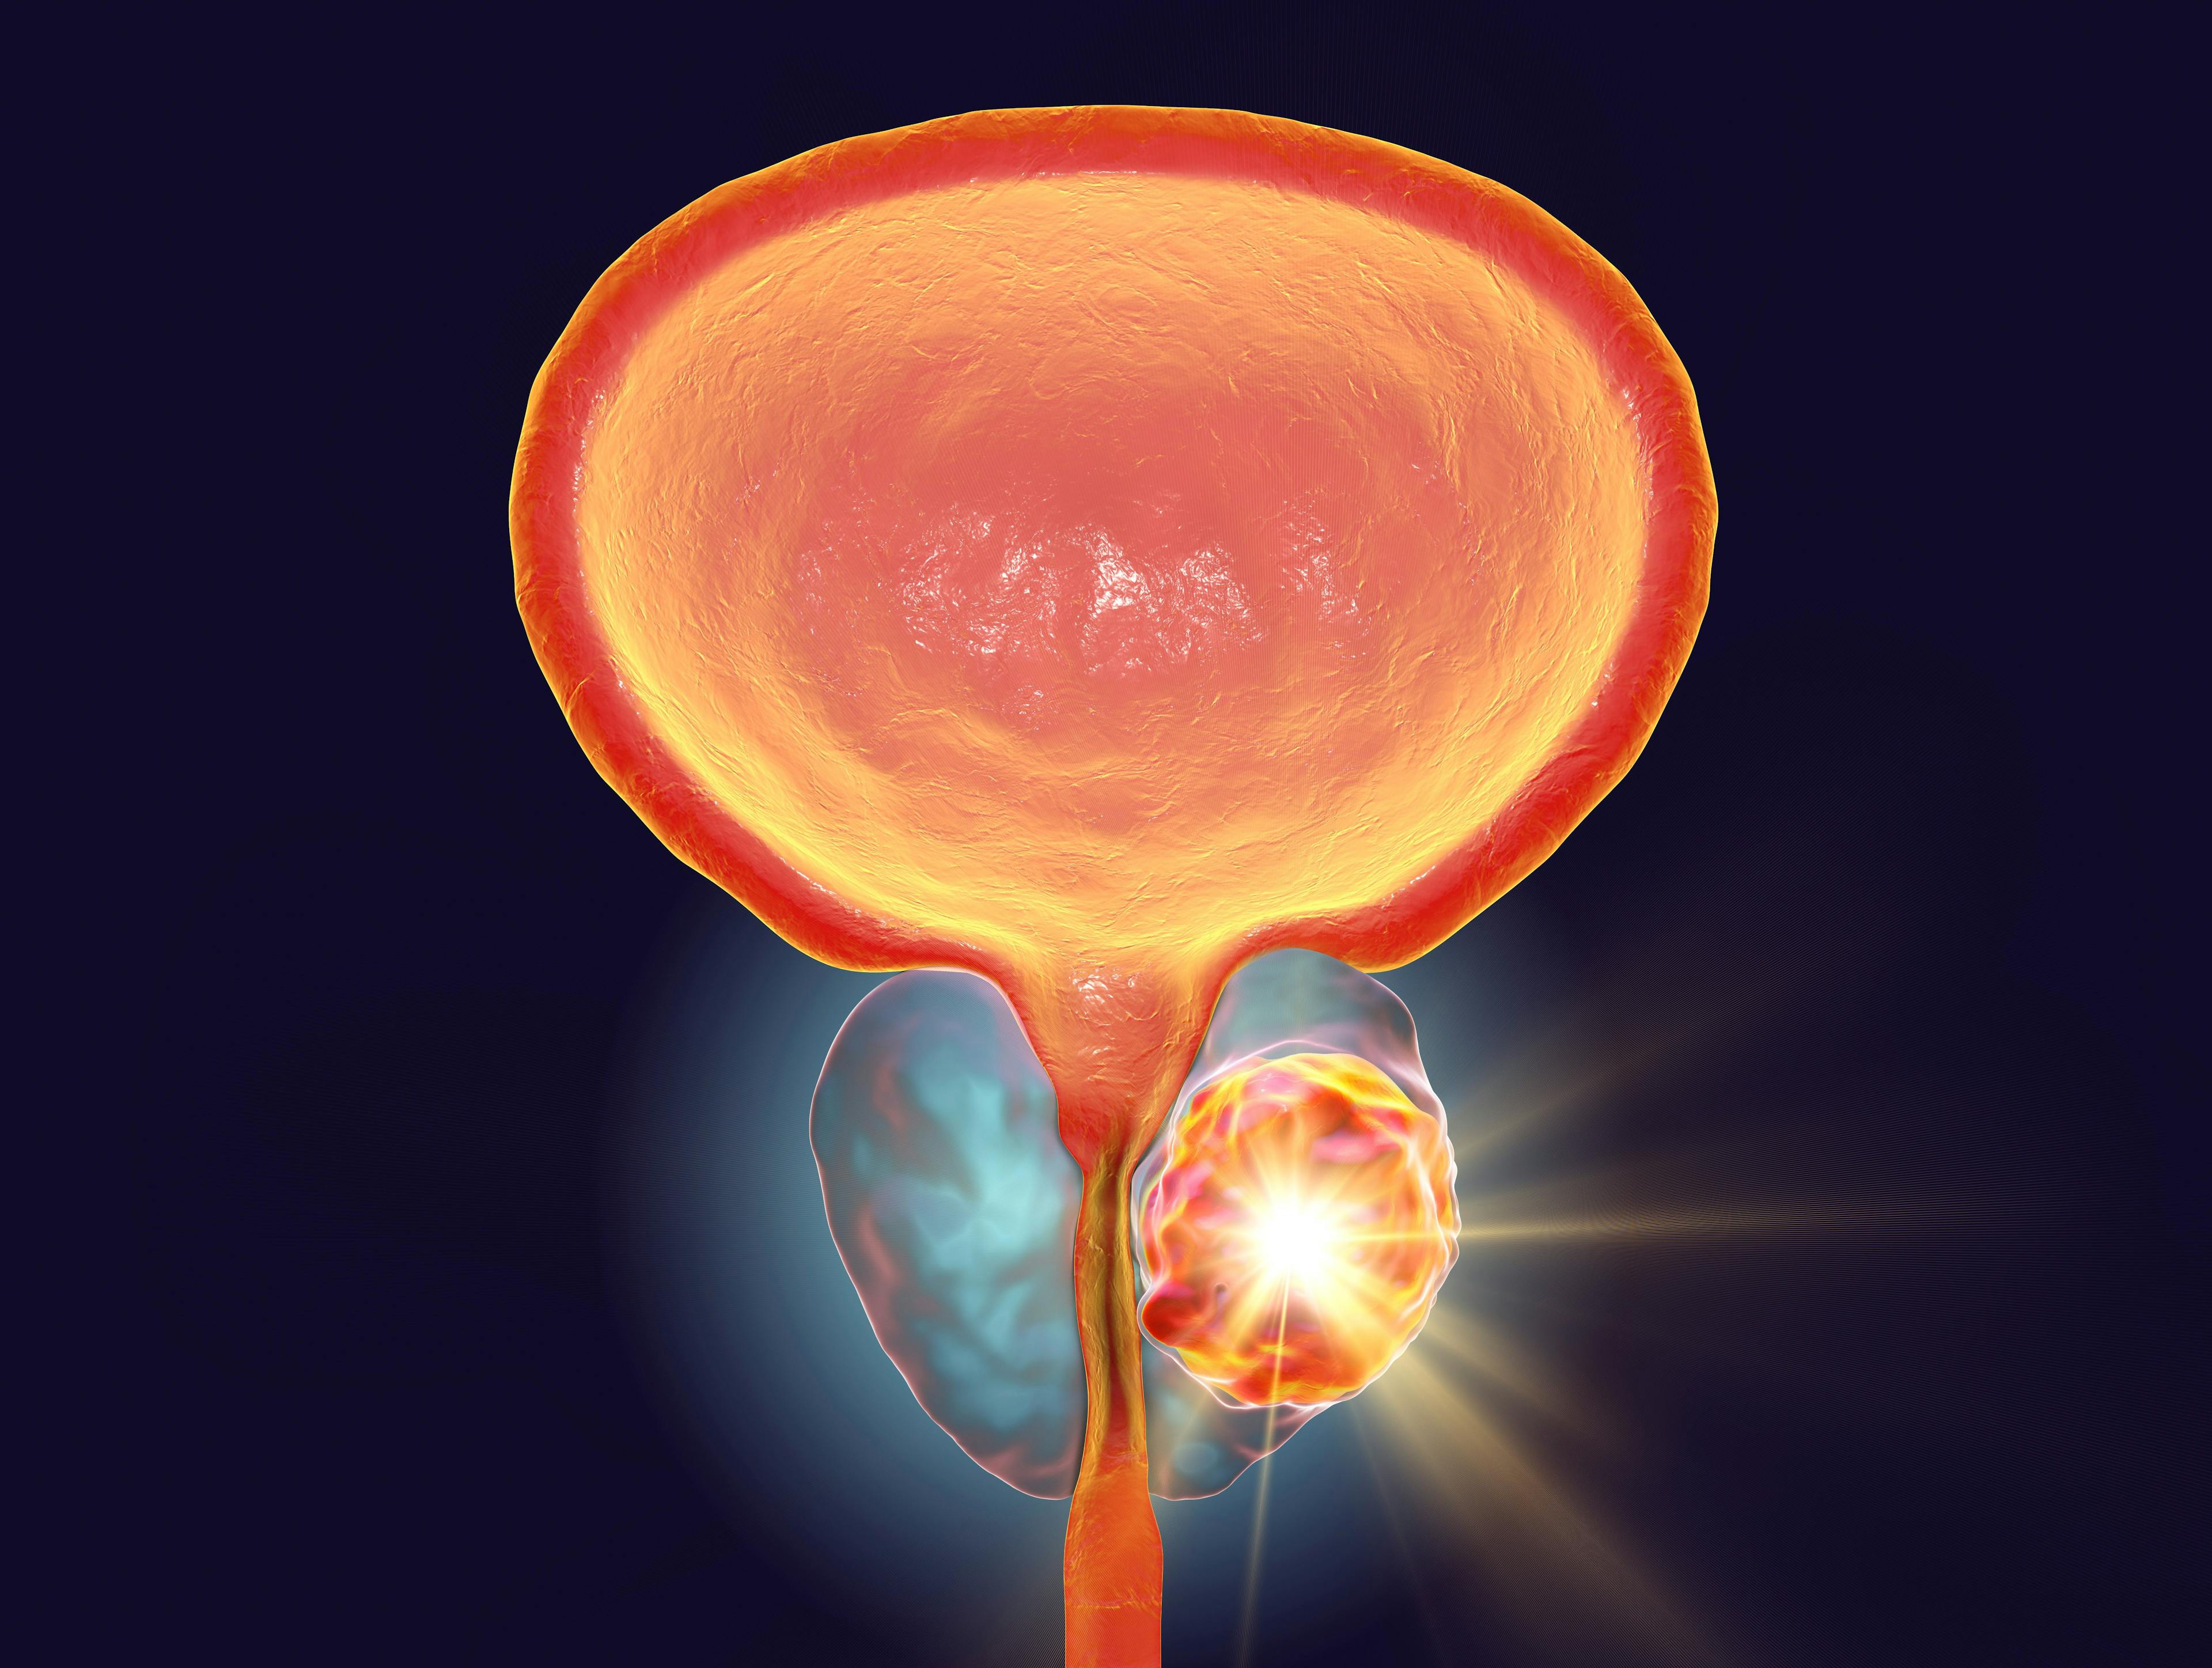 Conceptual image for prostate cancer treatment, 3D illustration showing destruction of a tumor inside prostate gland: ©Dr_Microbe - stock.adobe.com